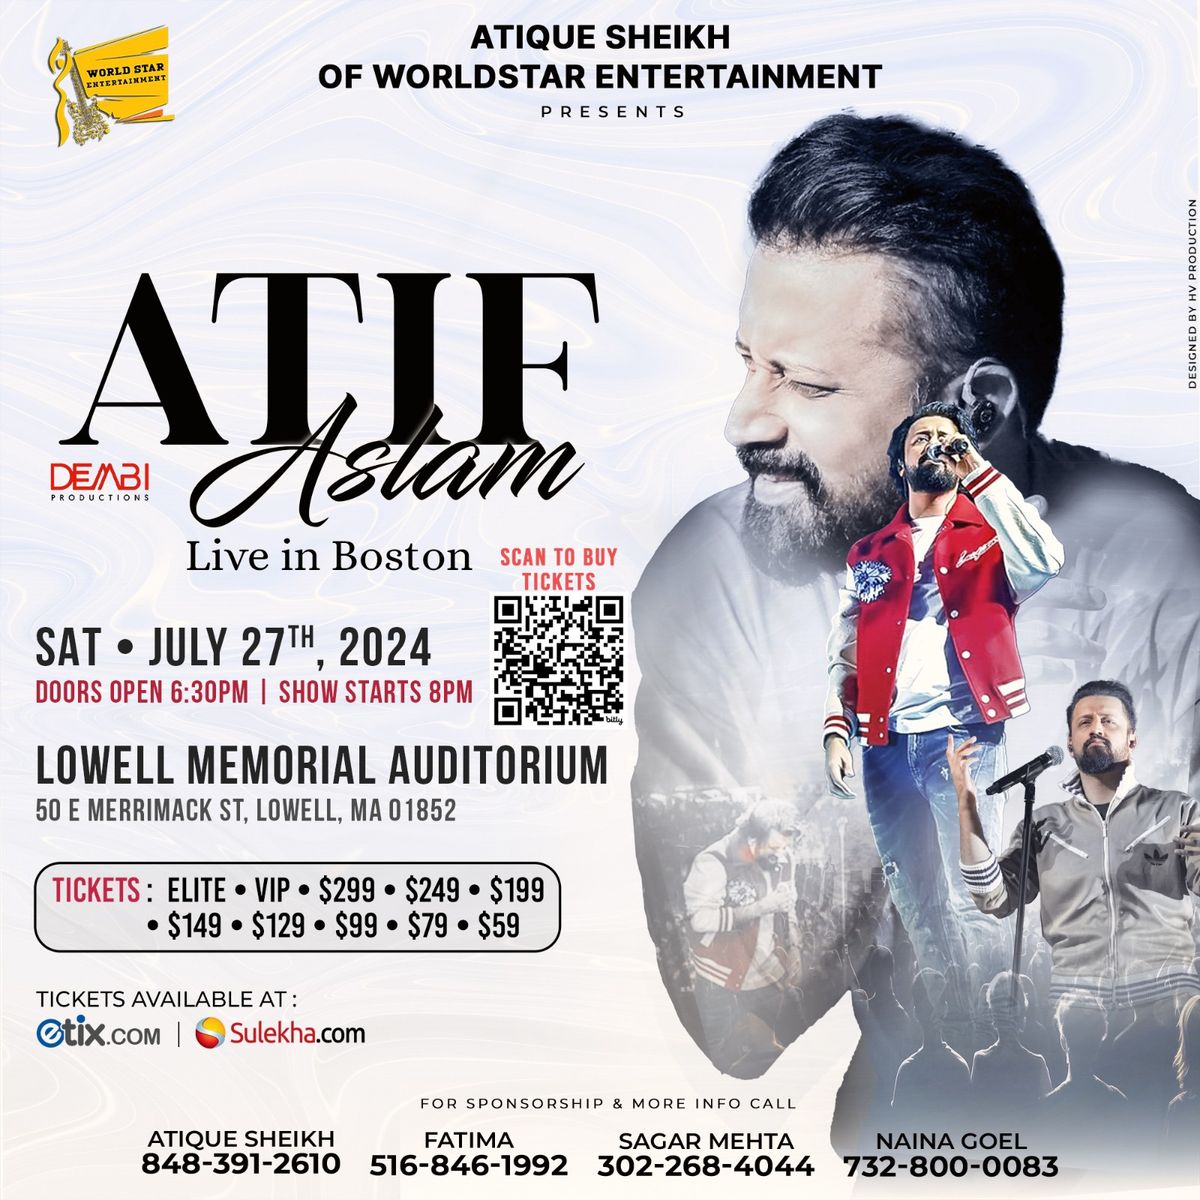 Atif Aslam Live in Boston